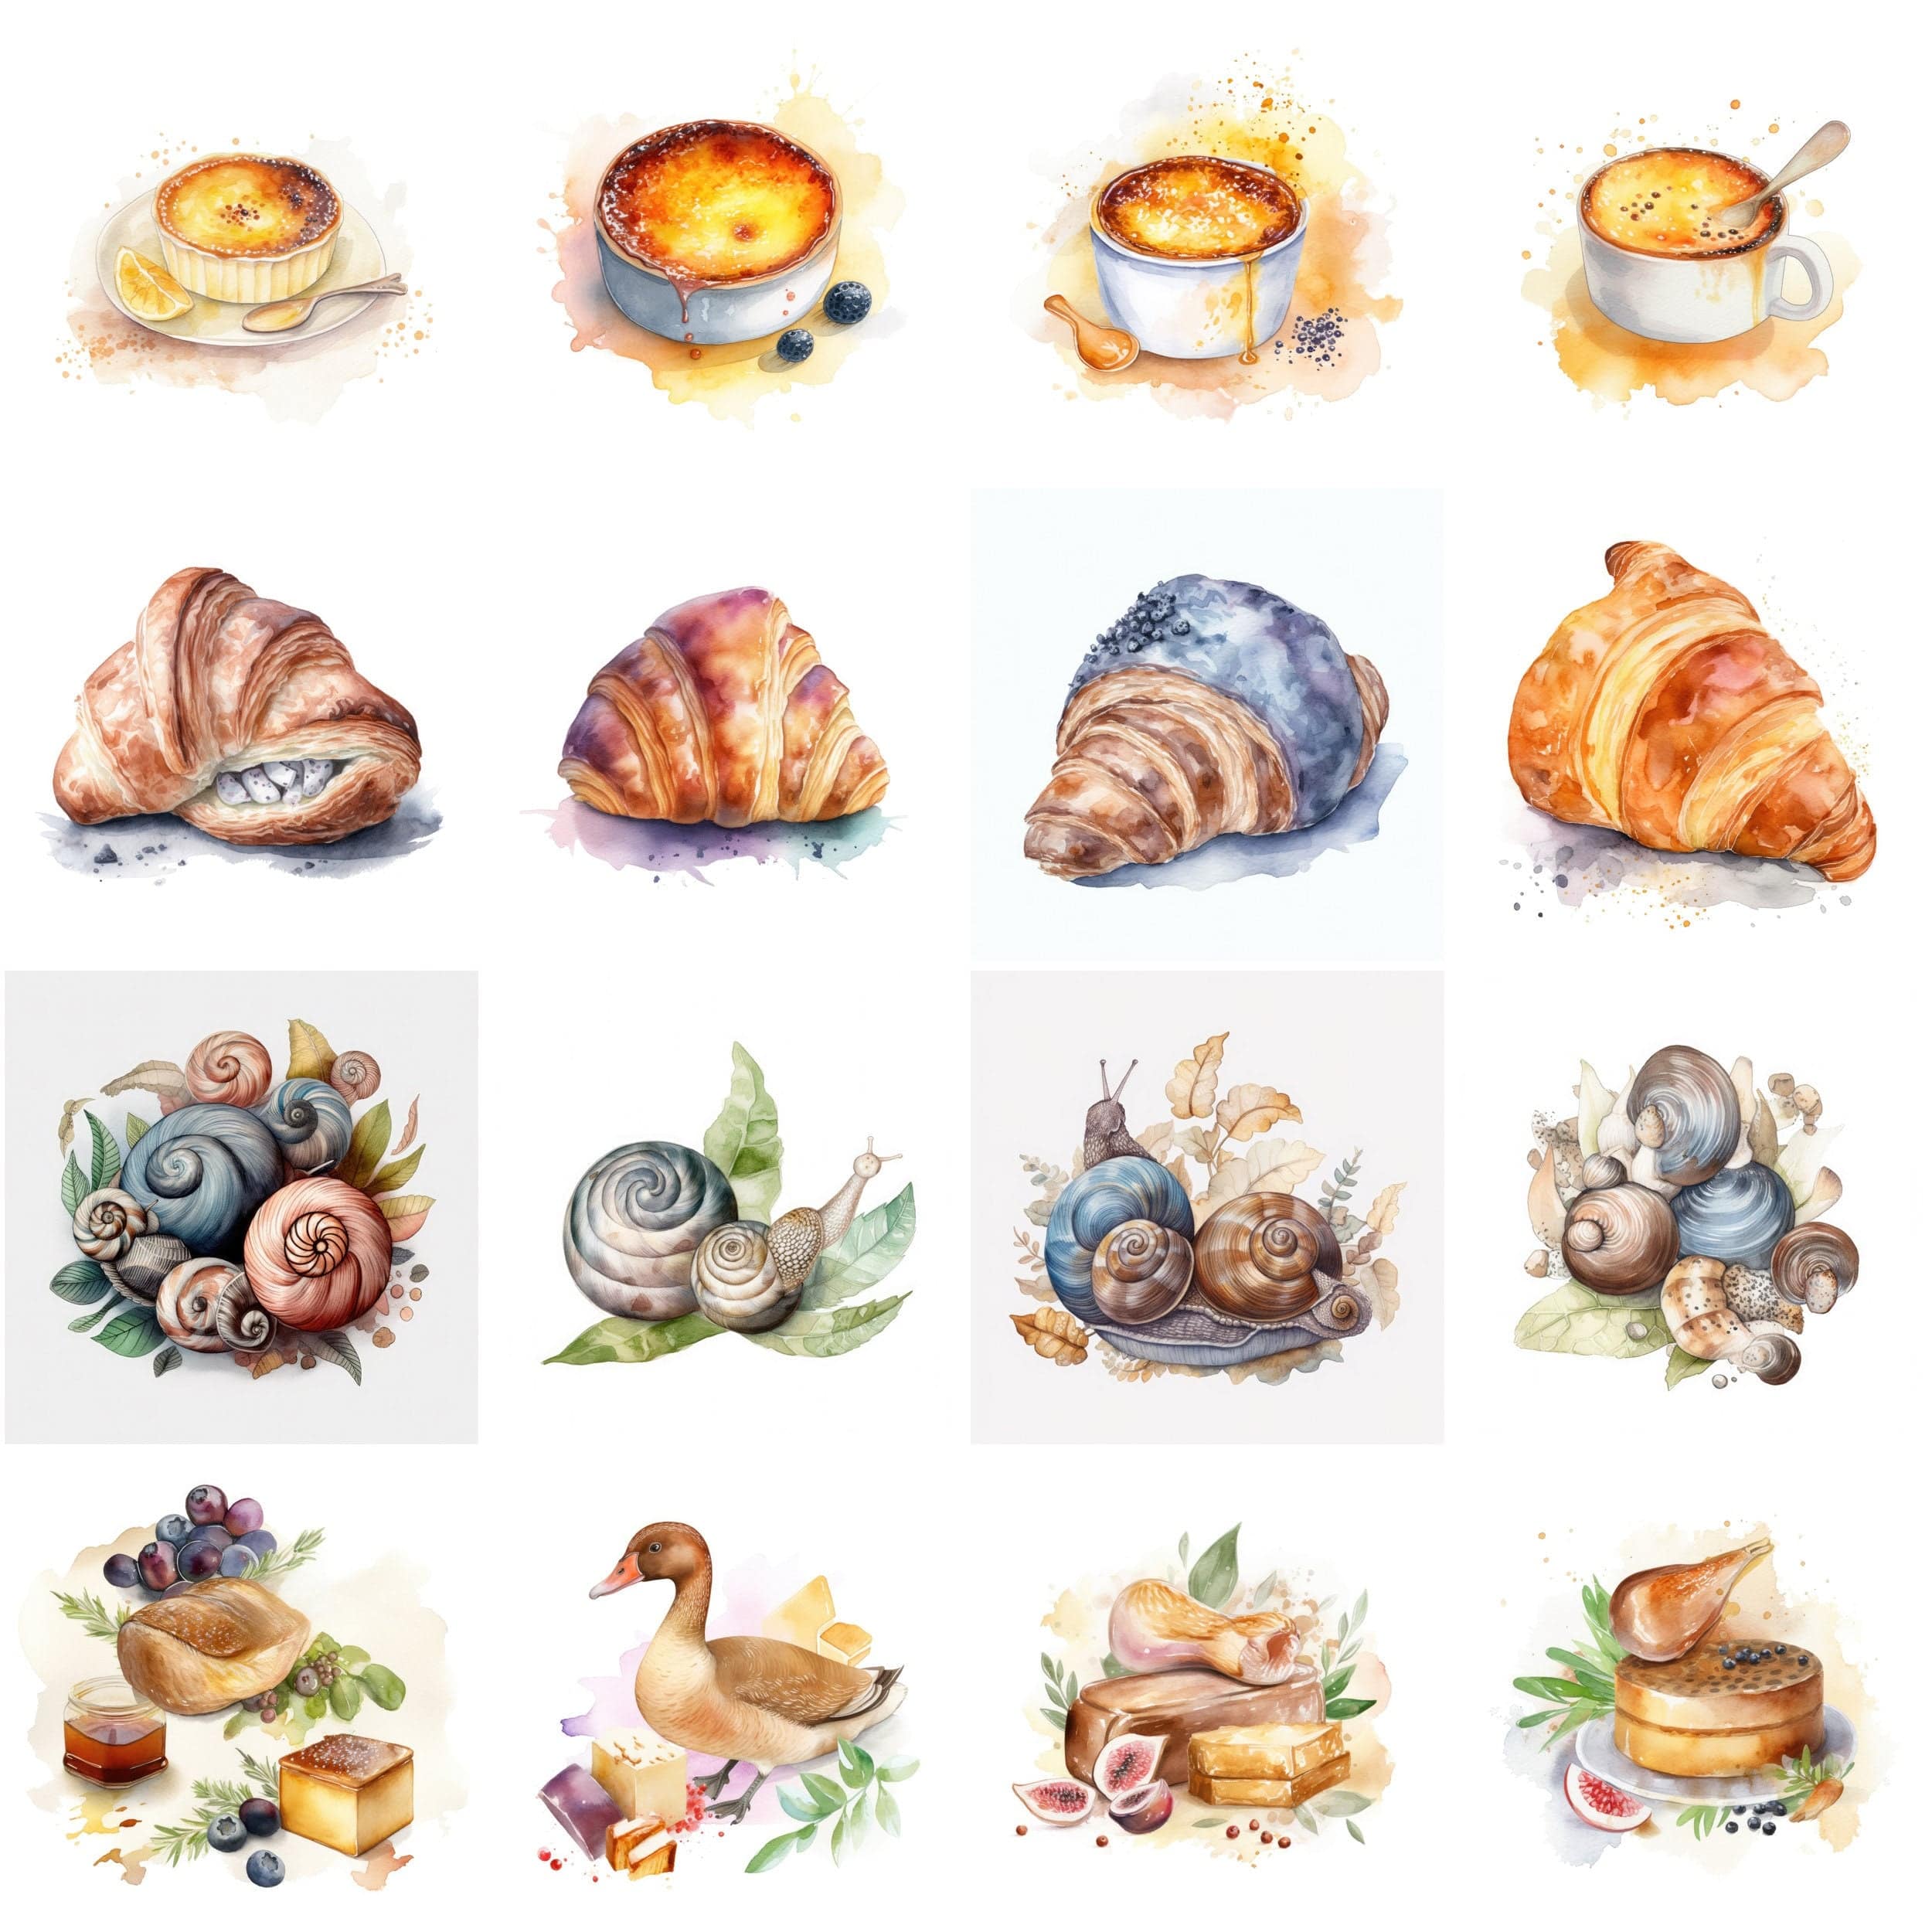 100 Transparent Exquisite French Cuisine Watercolor Images Bundle - Digital Download for Instant Art, Scrapbooking, and DIY Projects Digital Download Sumobundle